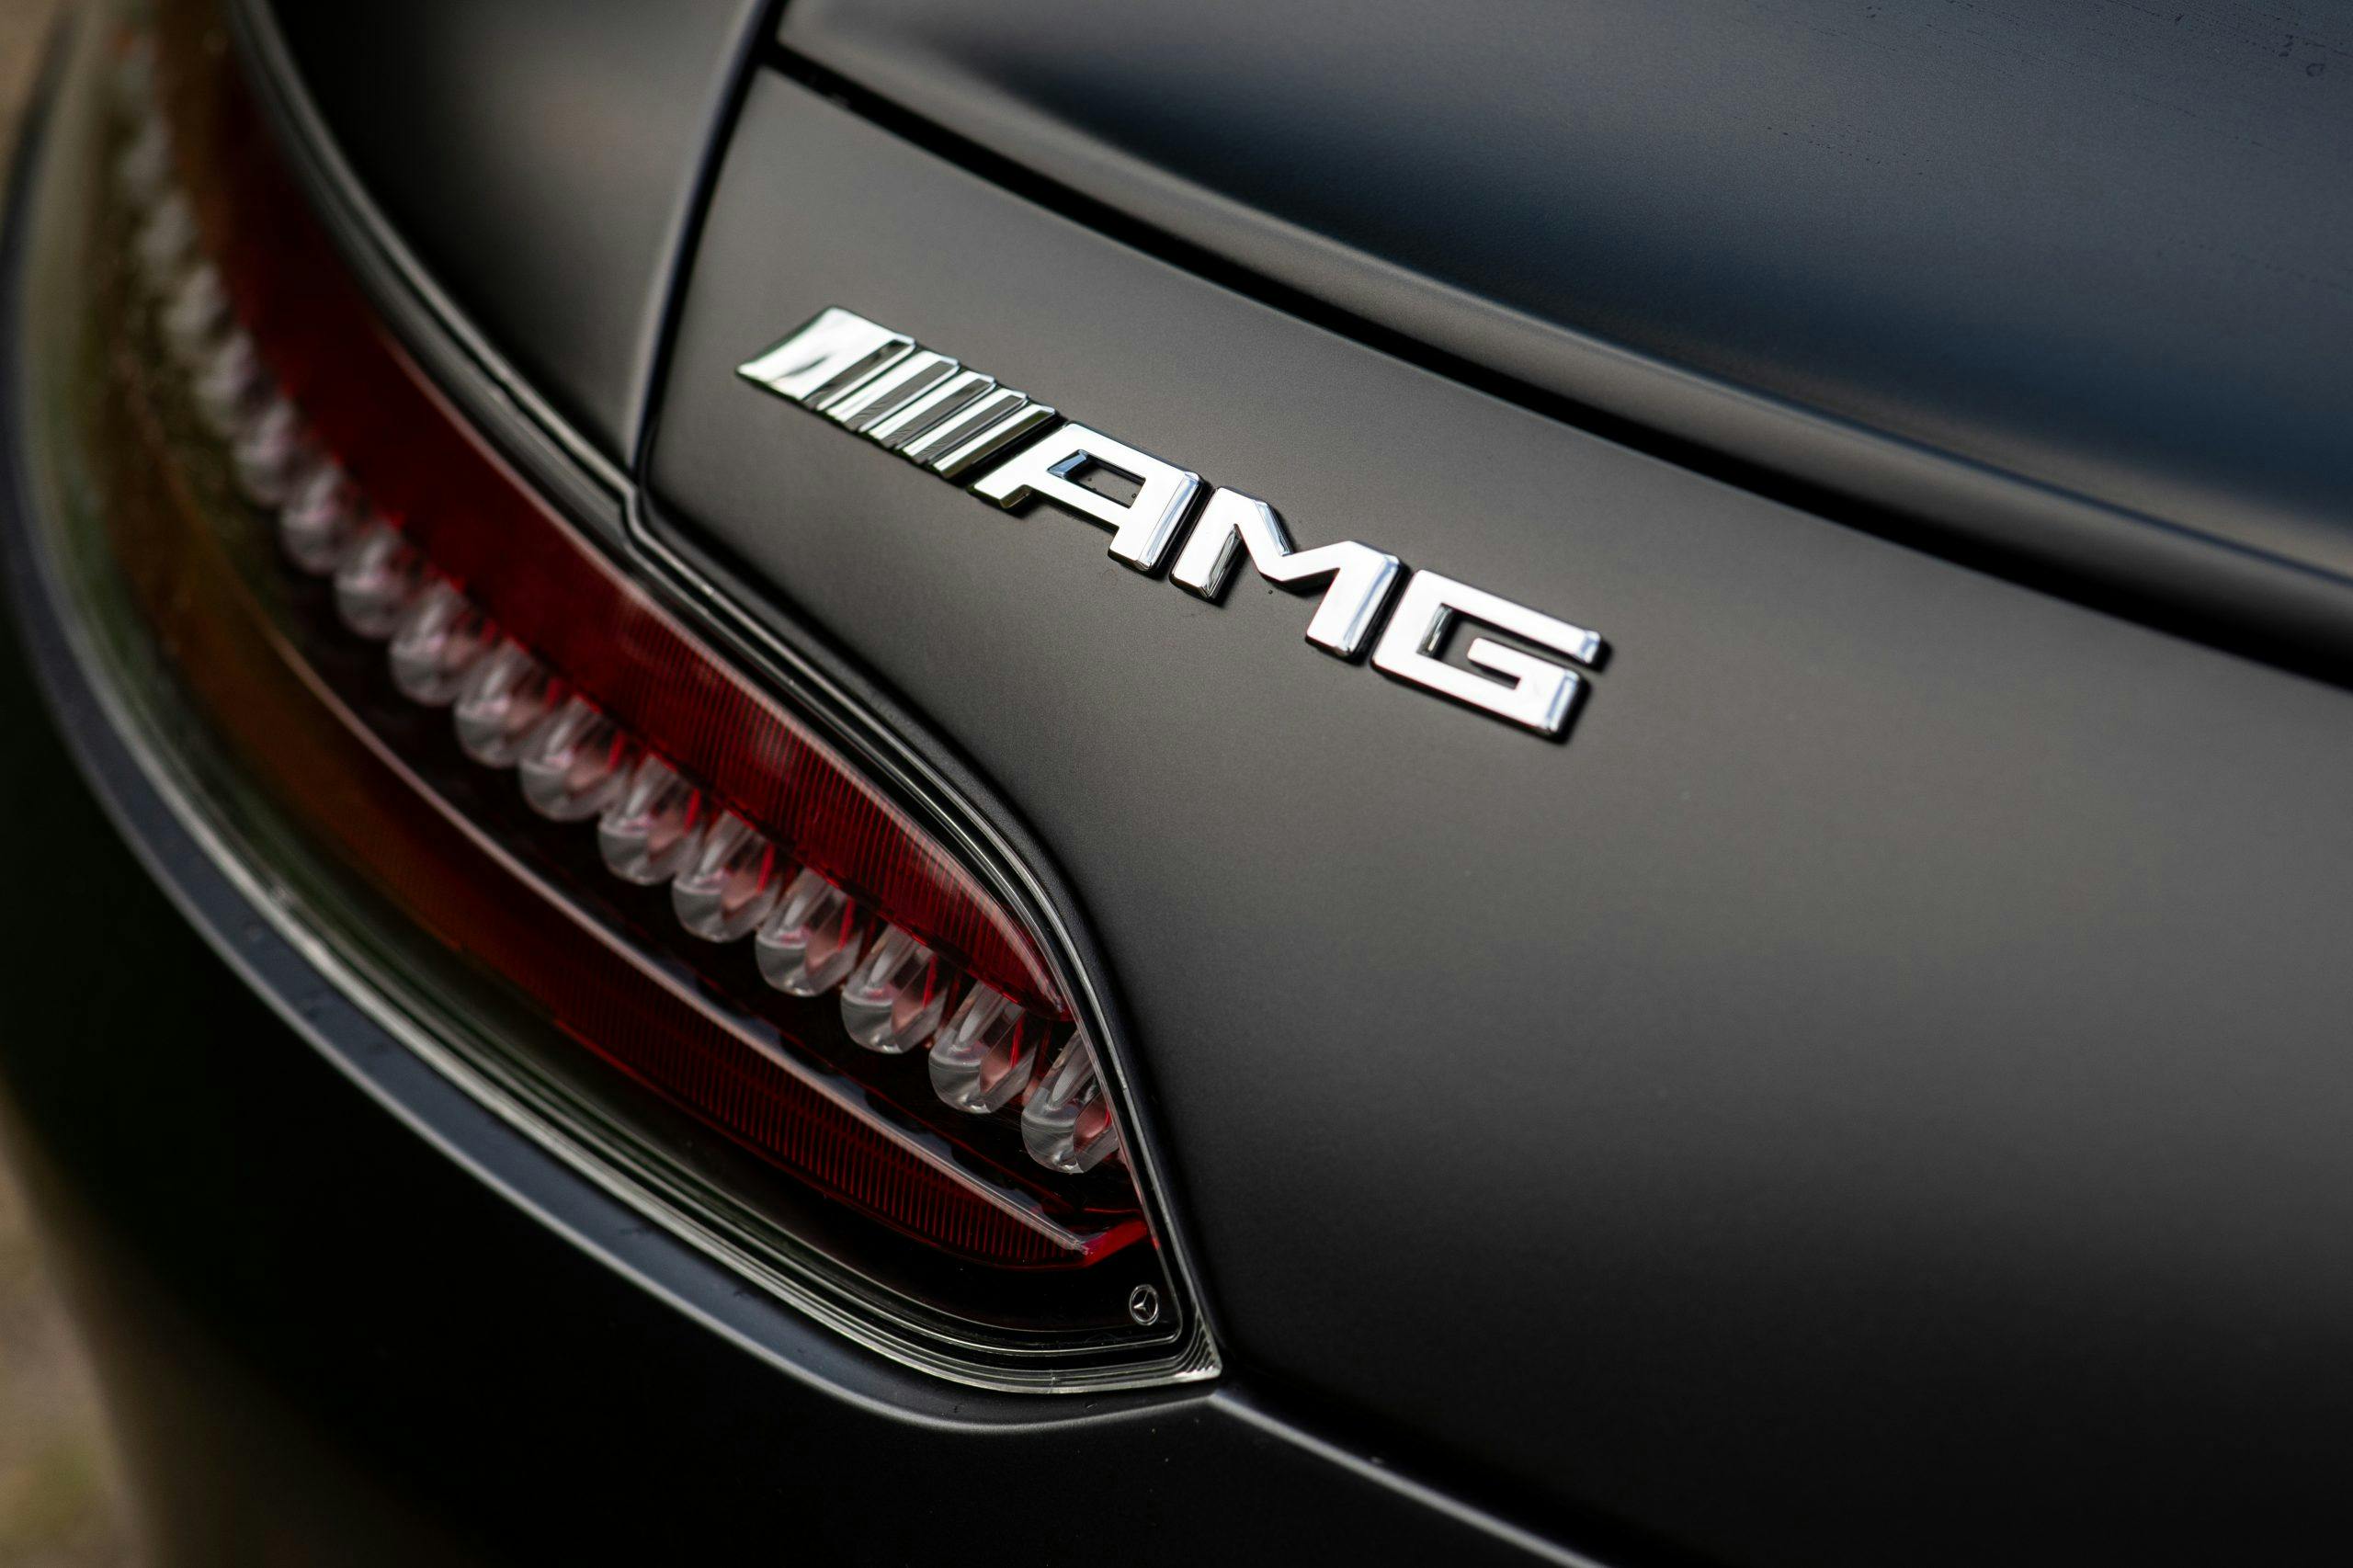 2021 Mercedes-AMG GT Stealth Edition badge